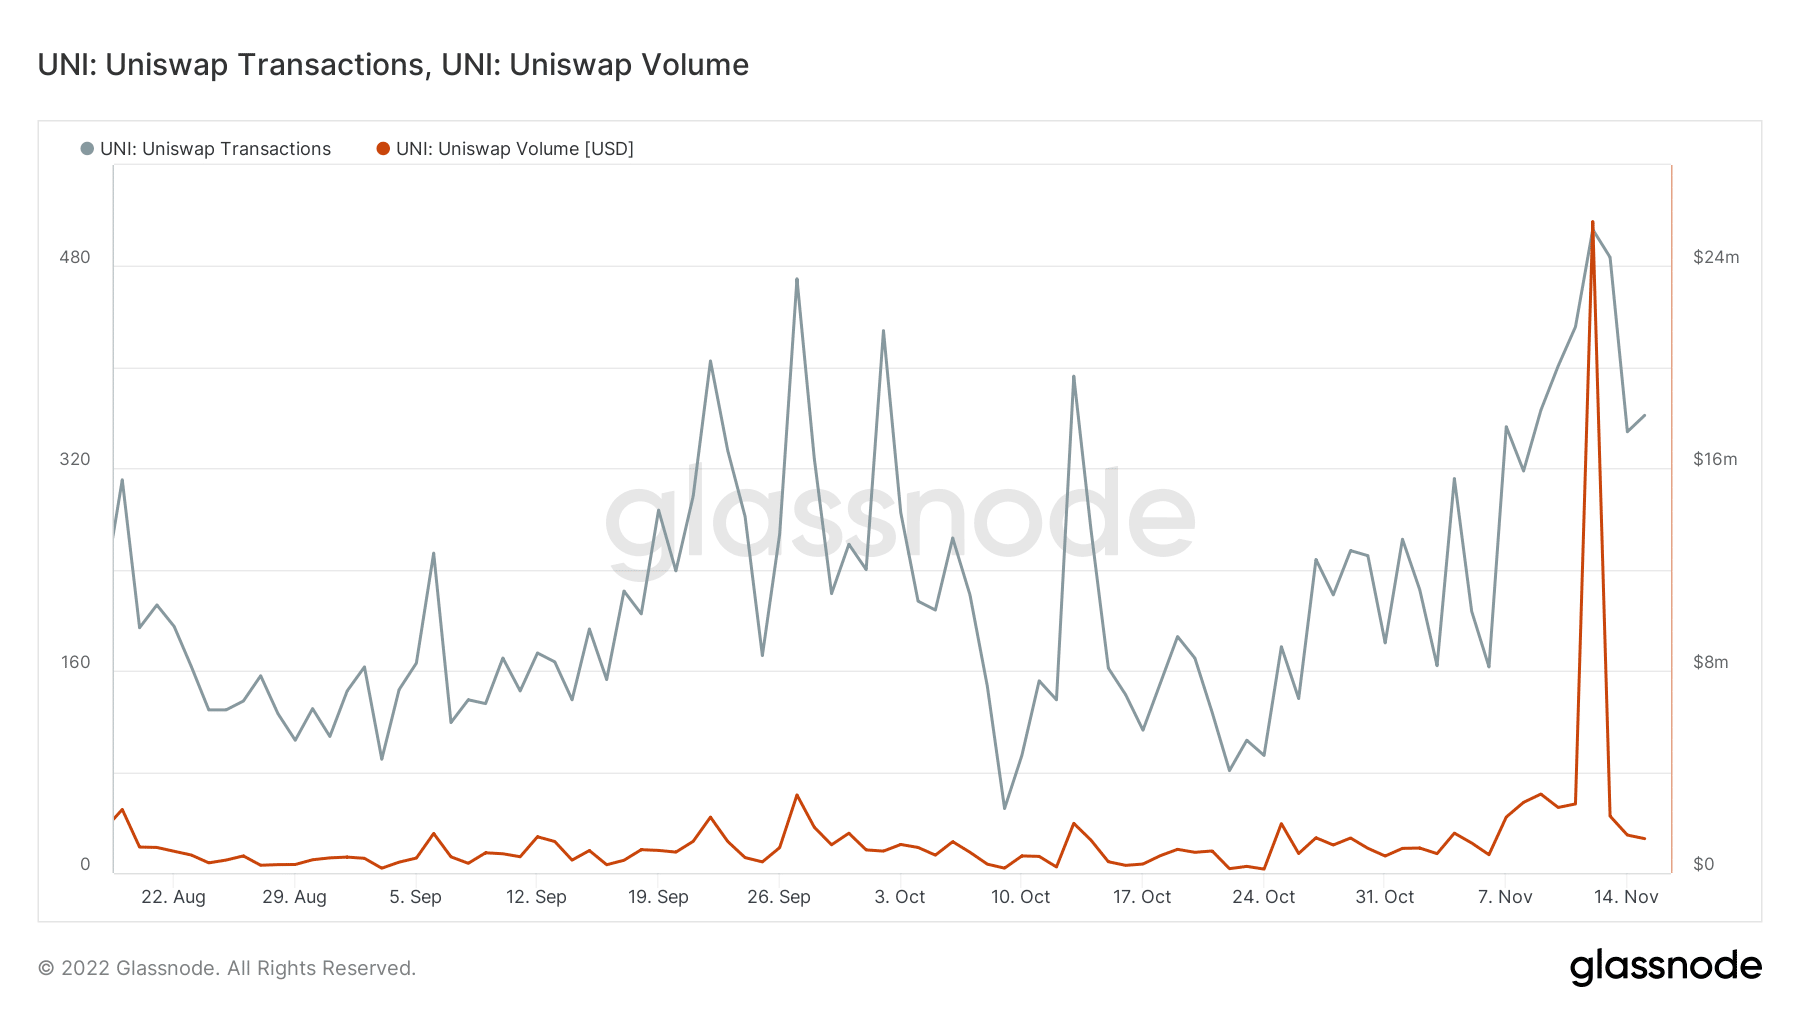 Uniswap transactions and volume